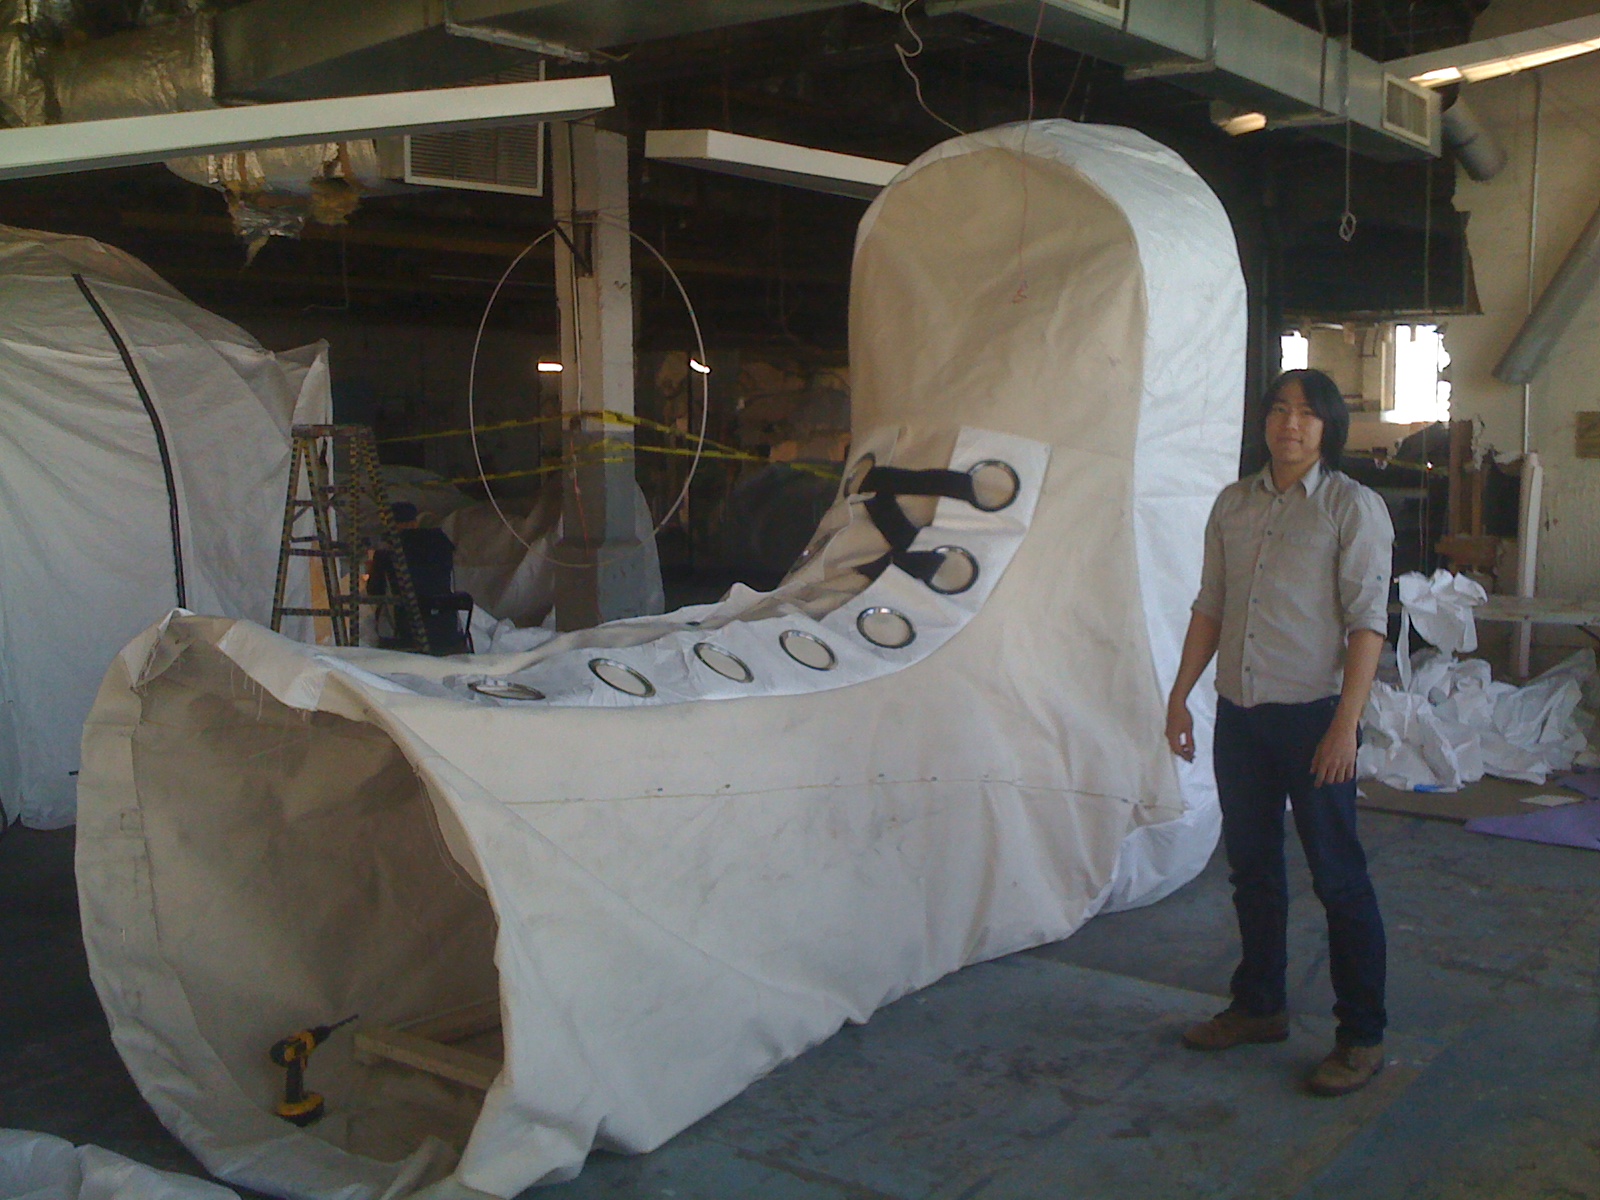 Tomaszewski's Space Suit Tent